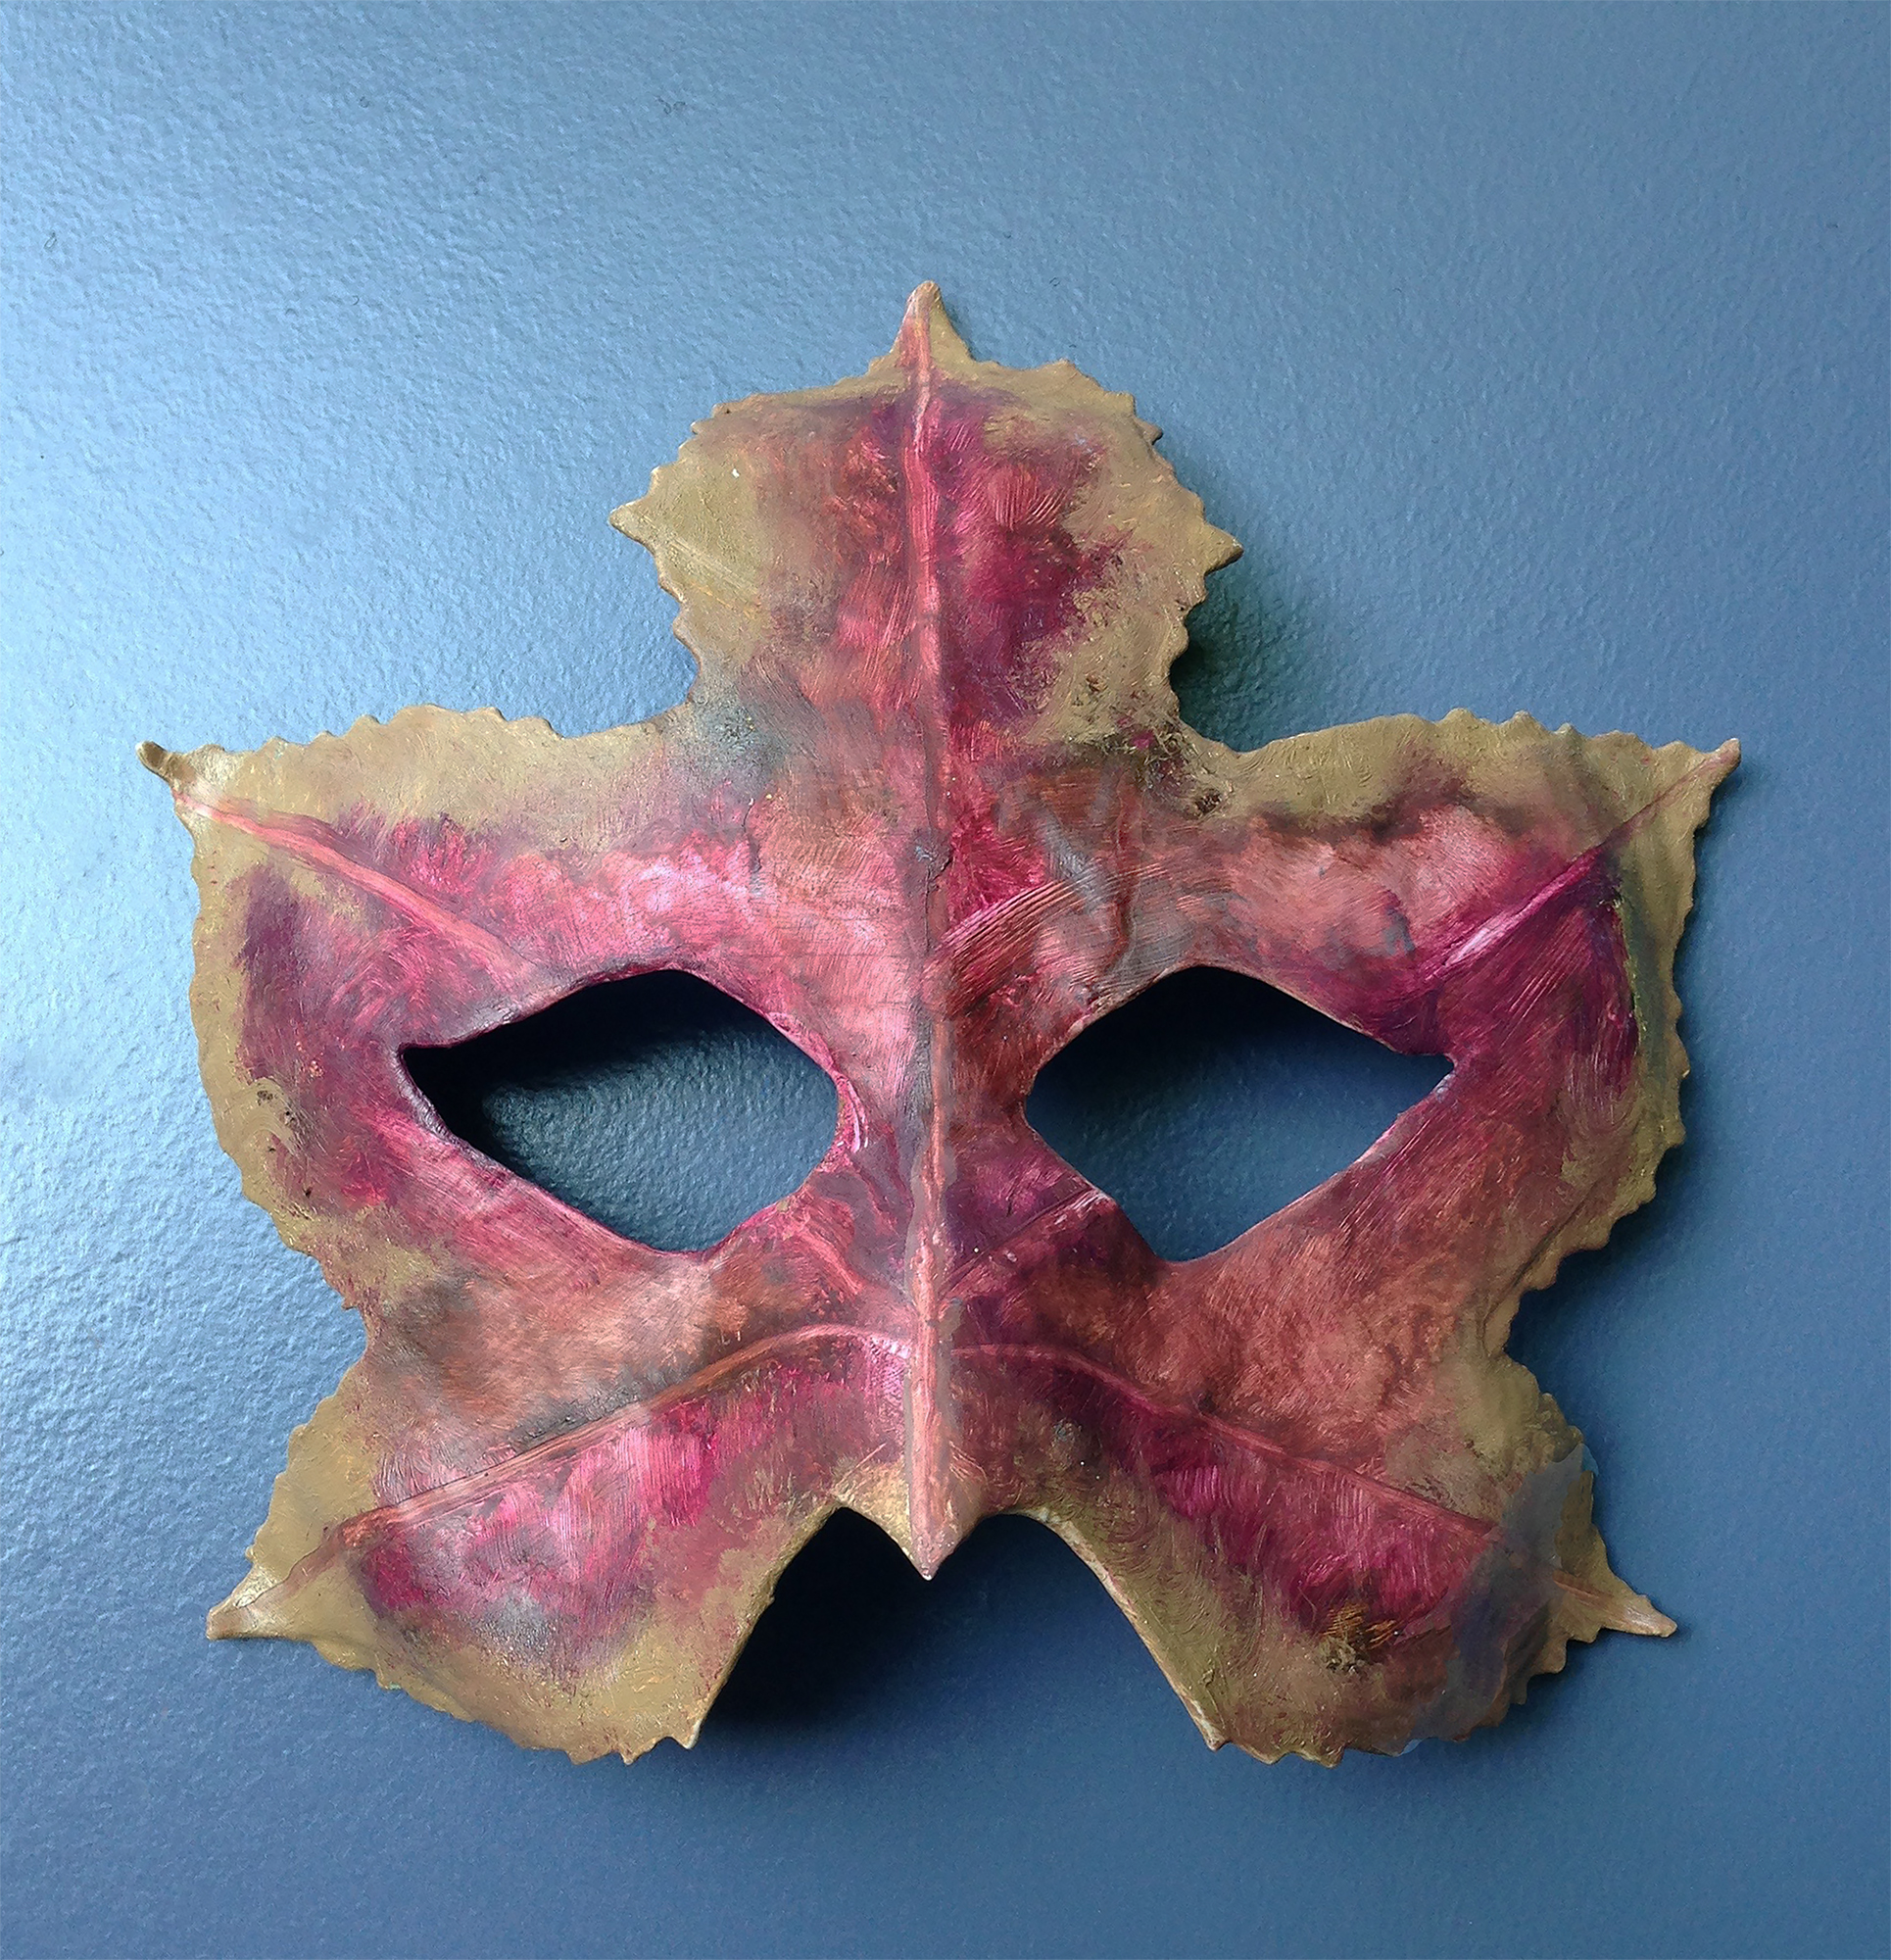    Maple Leaf Mask II   ,  2016. Oil on paper mache. 